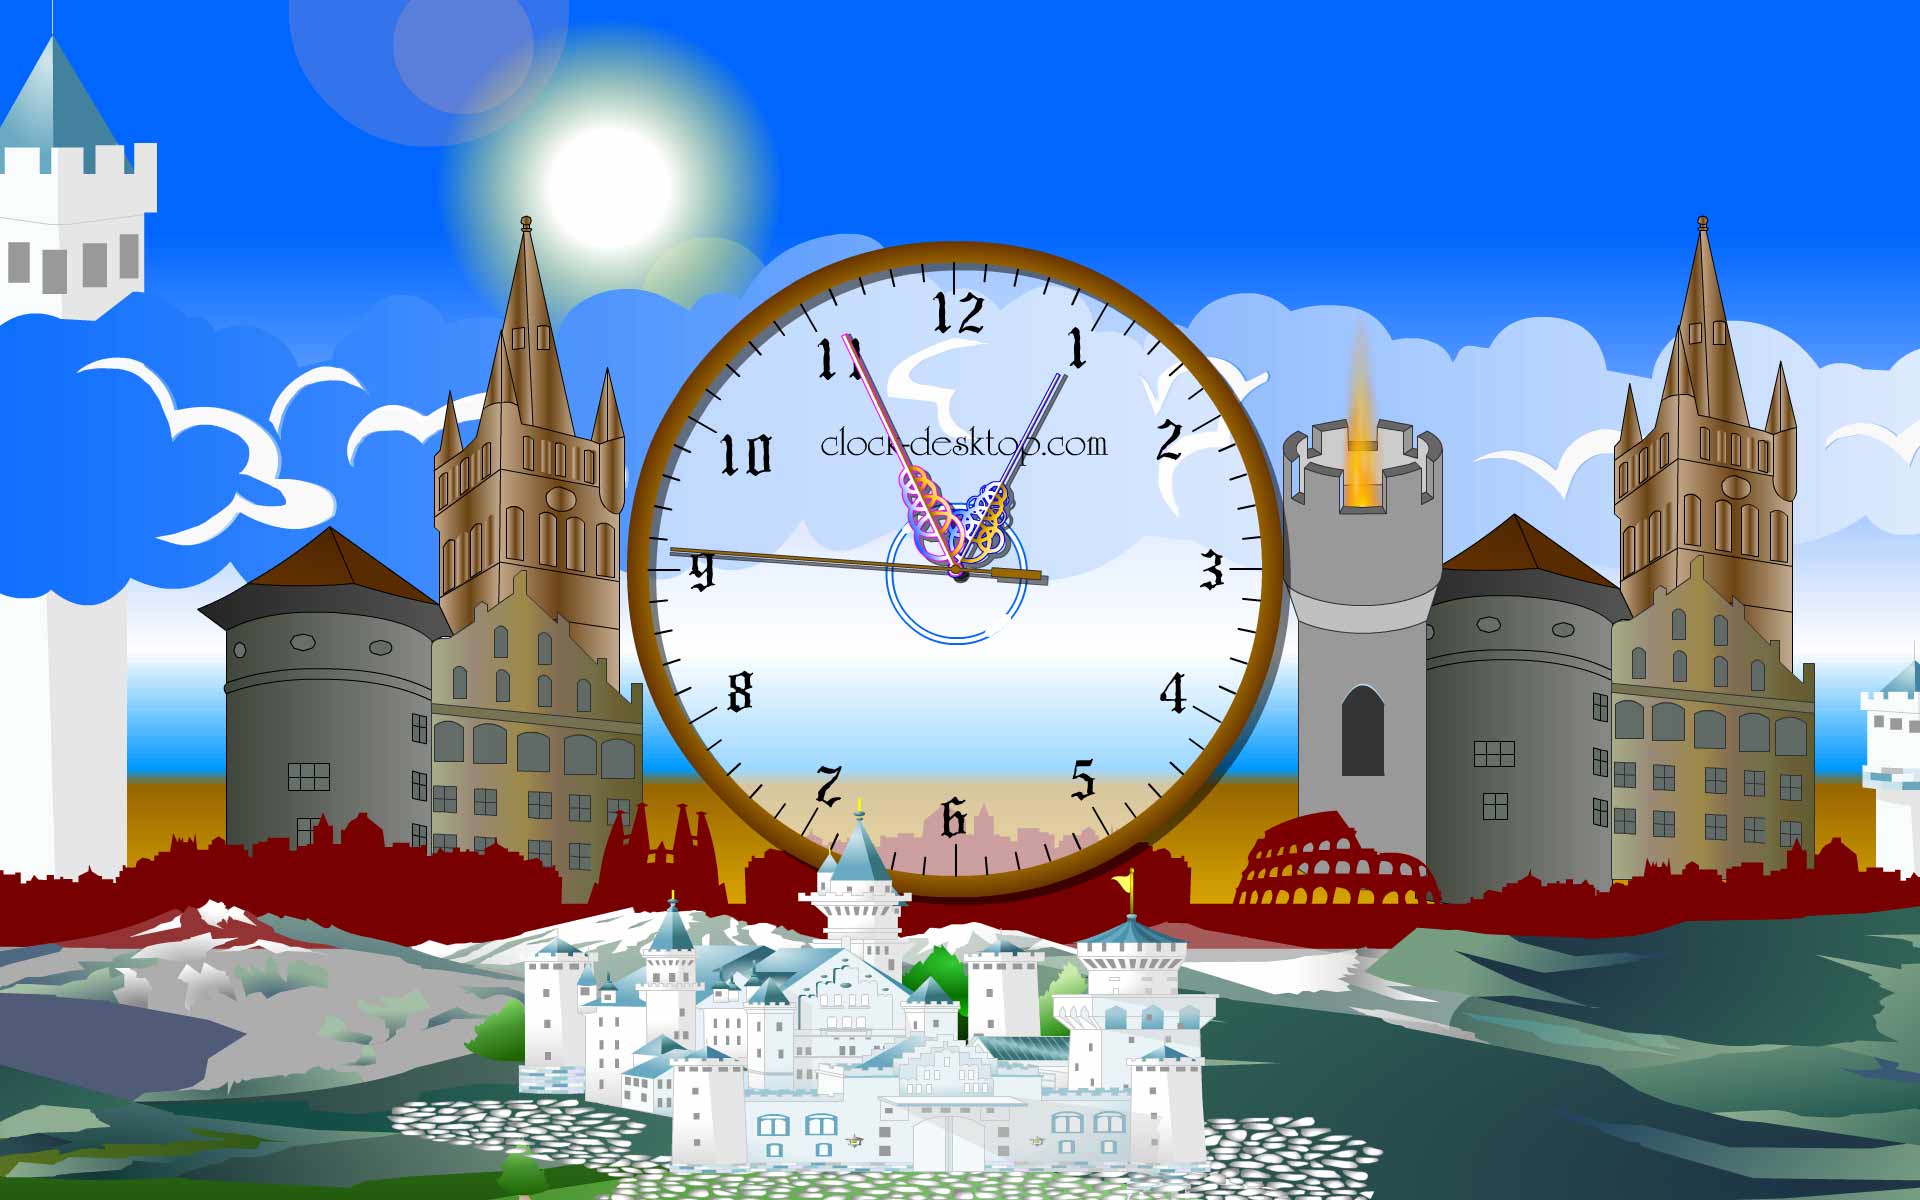 Animated clock wallpaper dowload